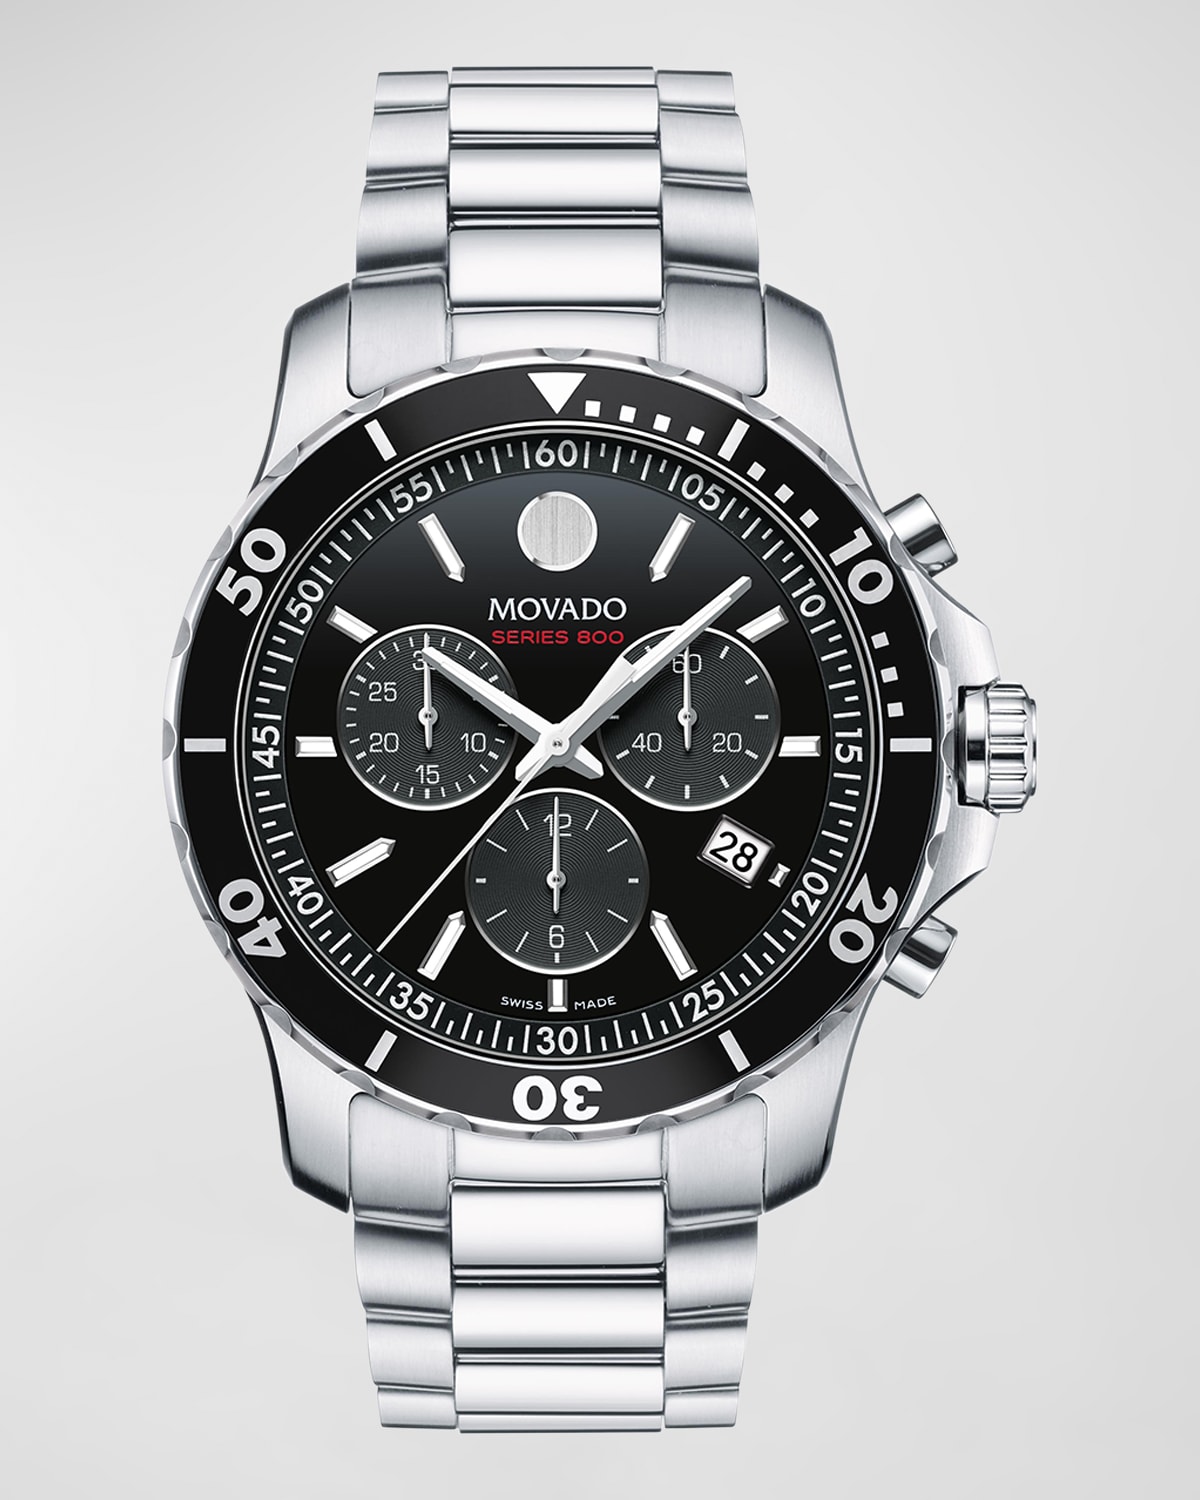 Series 800 Chronograph Watch, Gray/Black